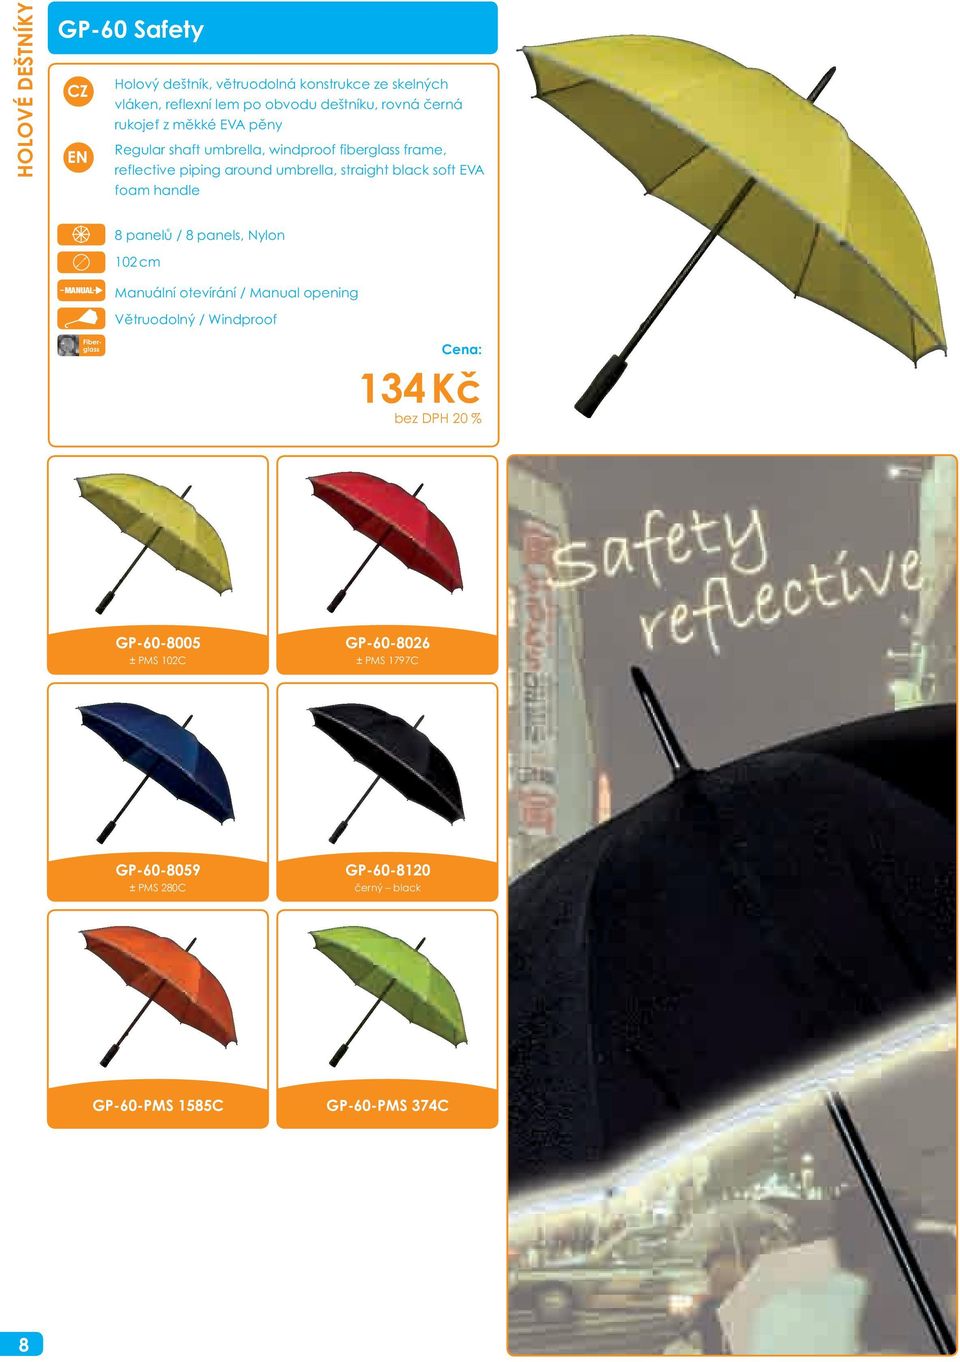 around umbrella, straight black soft EVA foam handle 8 panelů / 8 panels, Nylon 102 cm Manuální otevírání / Manual